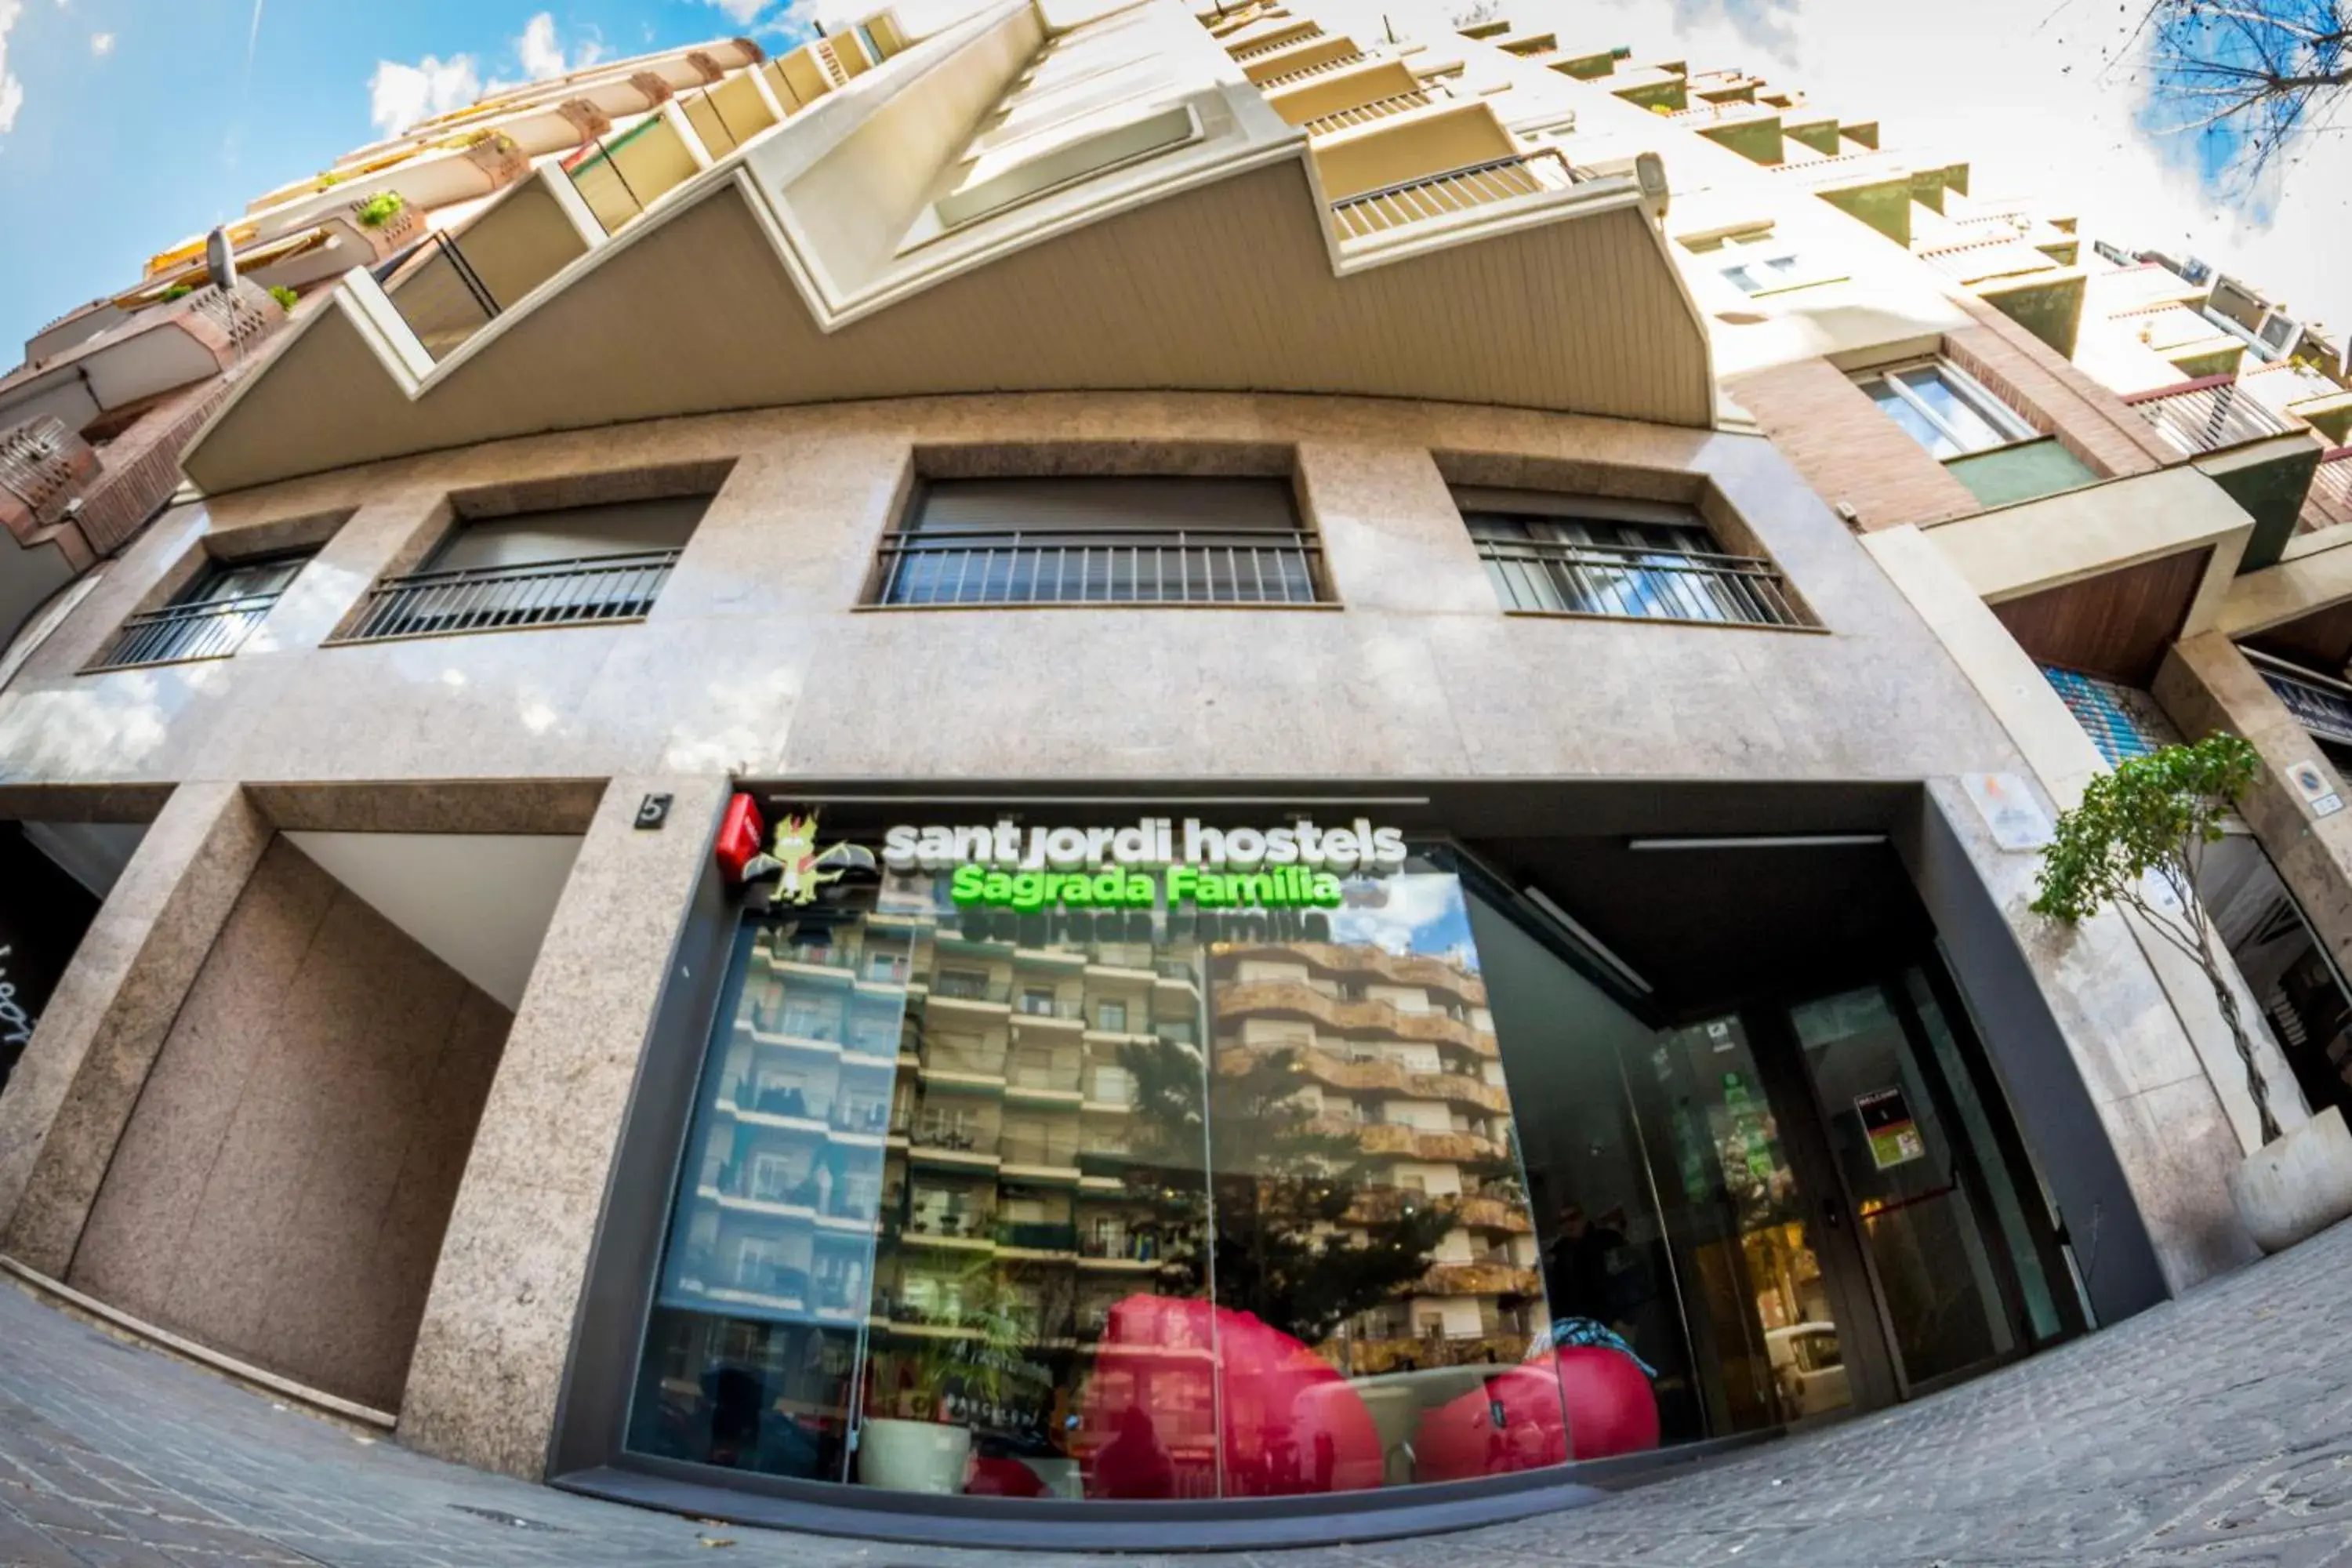 Facade/entrance, Property Building in Sant Jordi Hostels Sagrada Familia